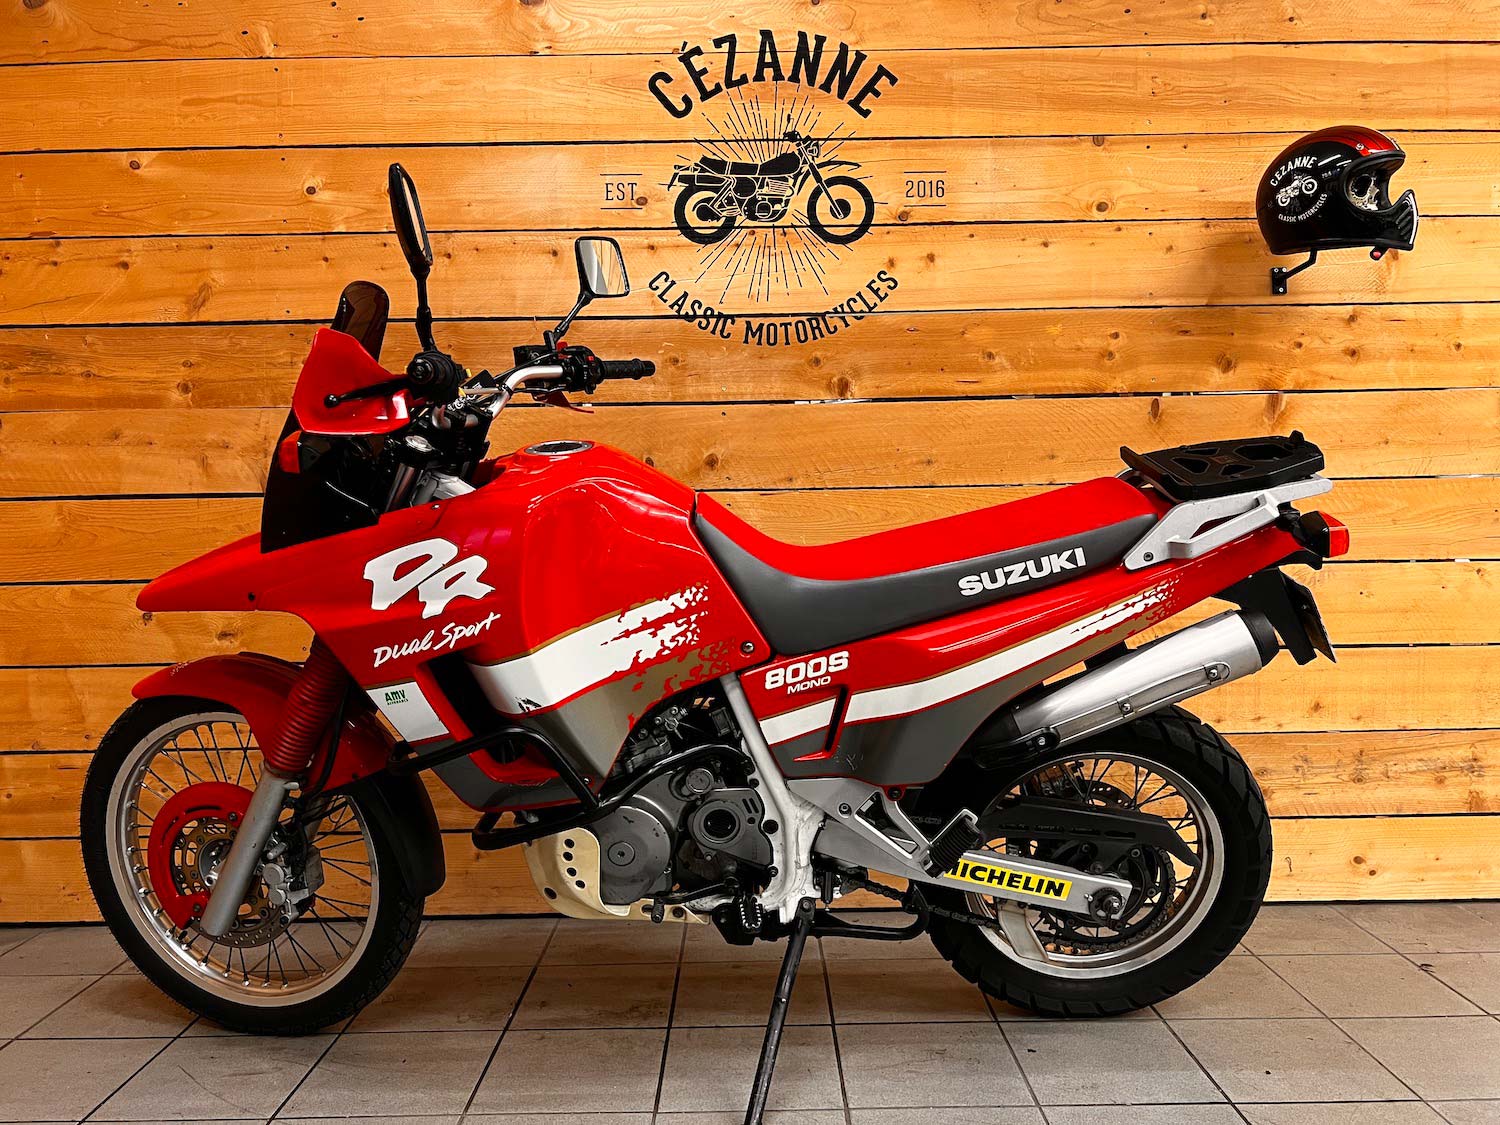 Suzuki_dr800s_Cezanne_Classic_Motorcycle_3-159.jpg